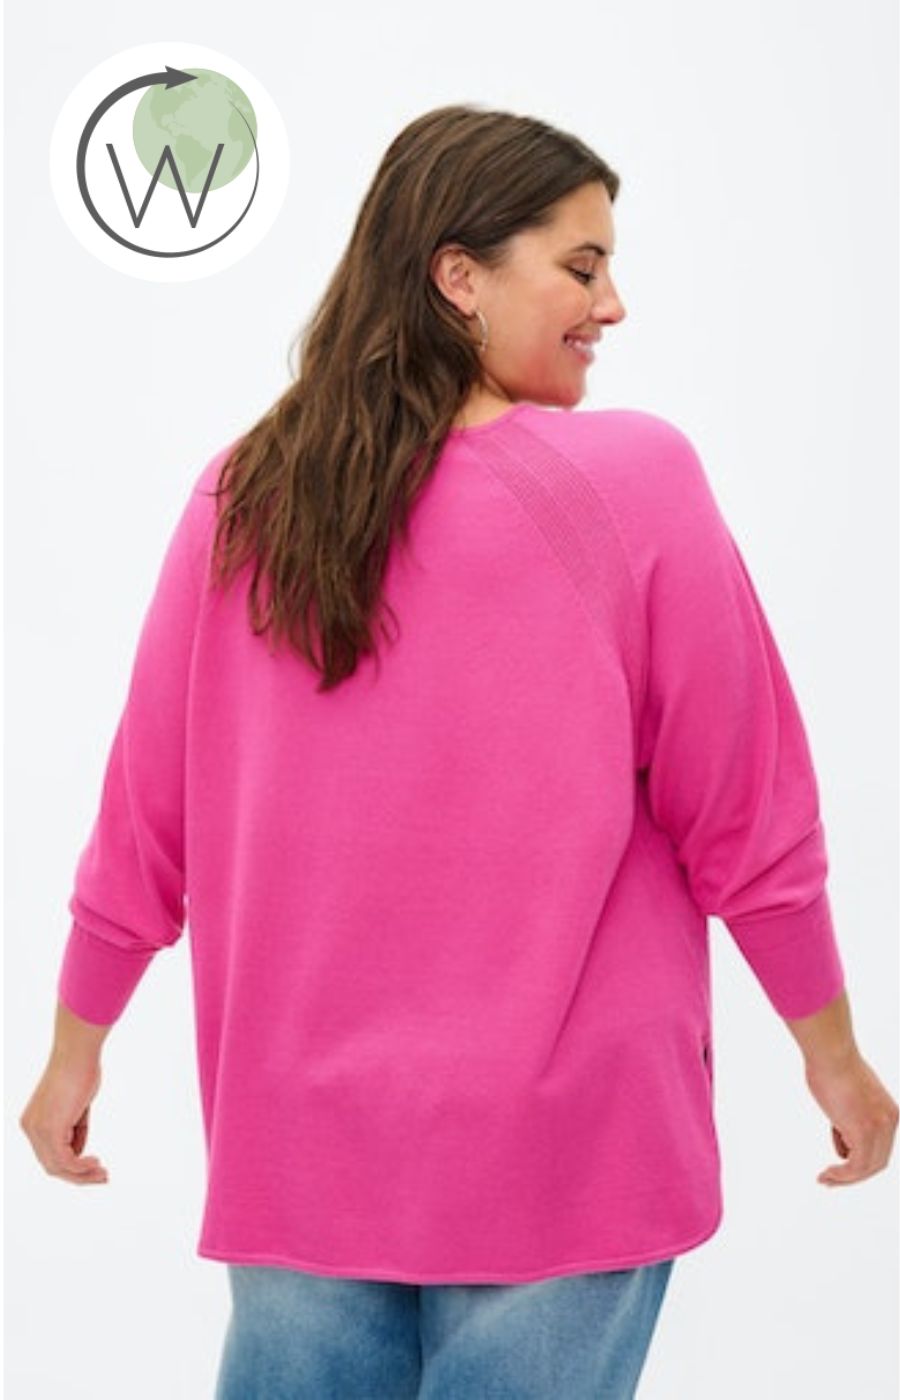 Zizzi Mella Pullover in Pink